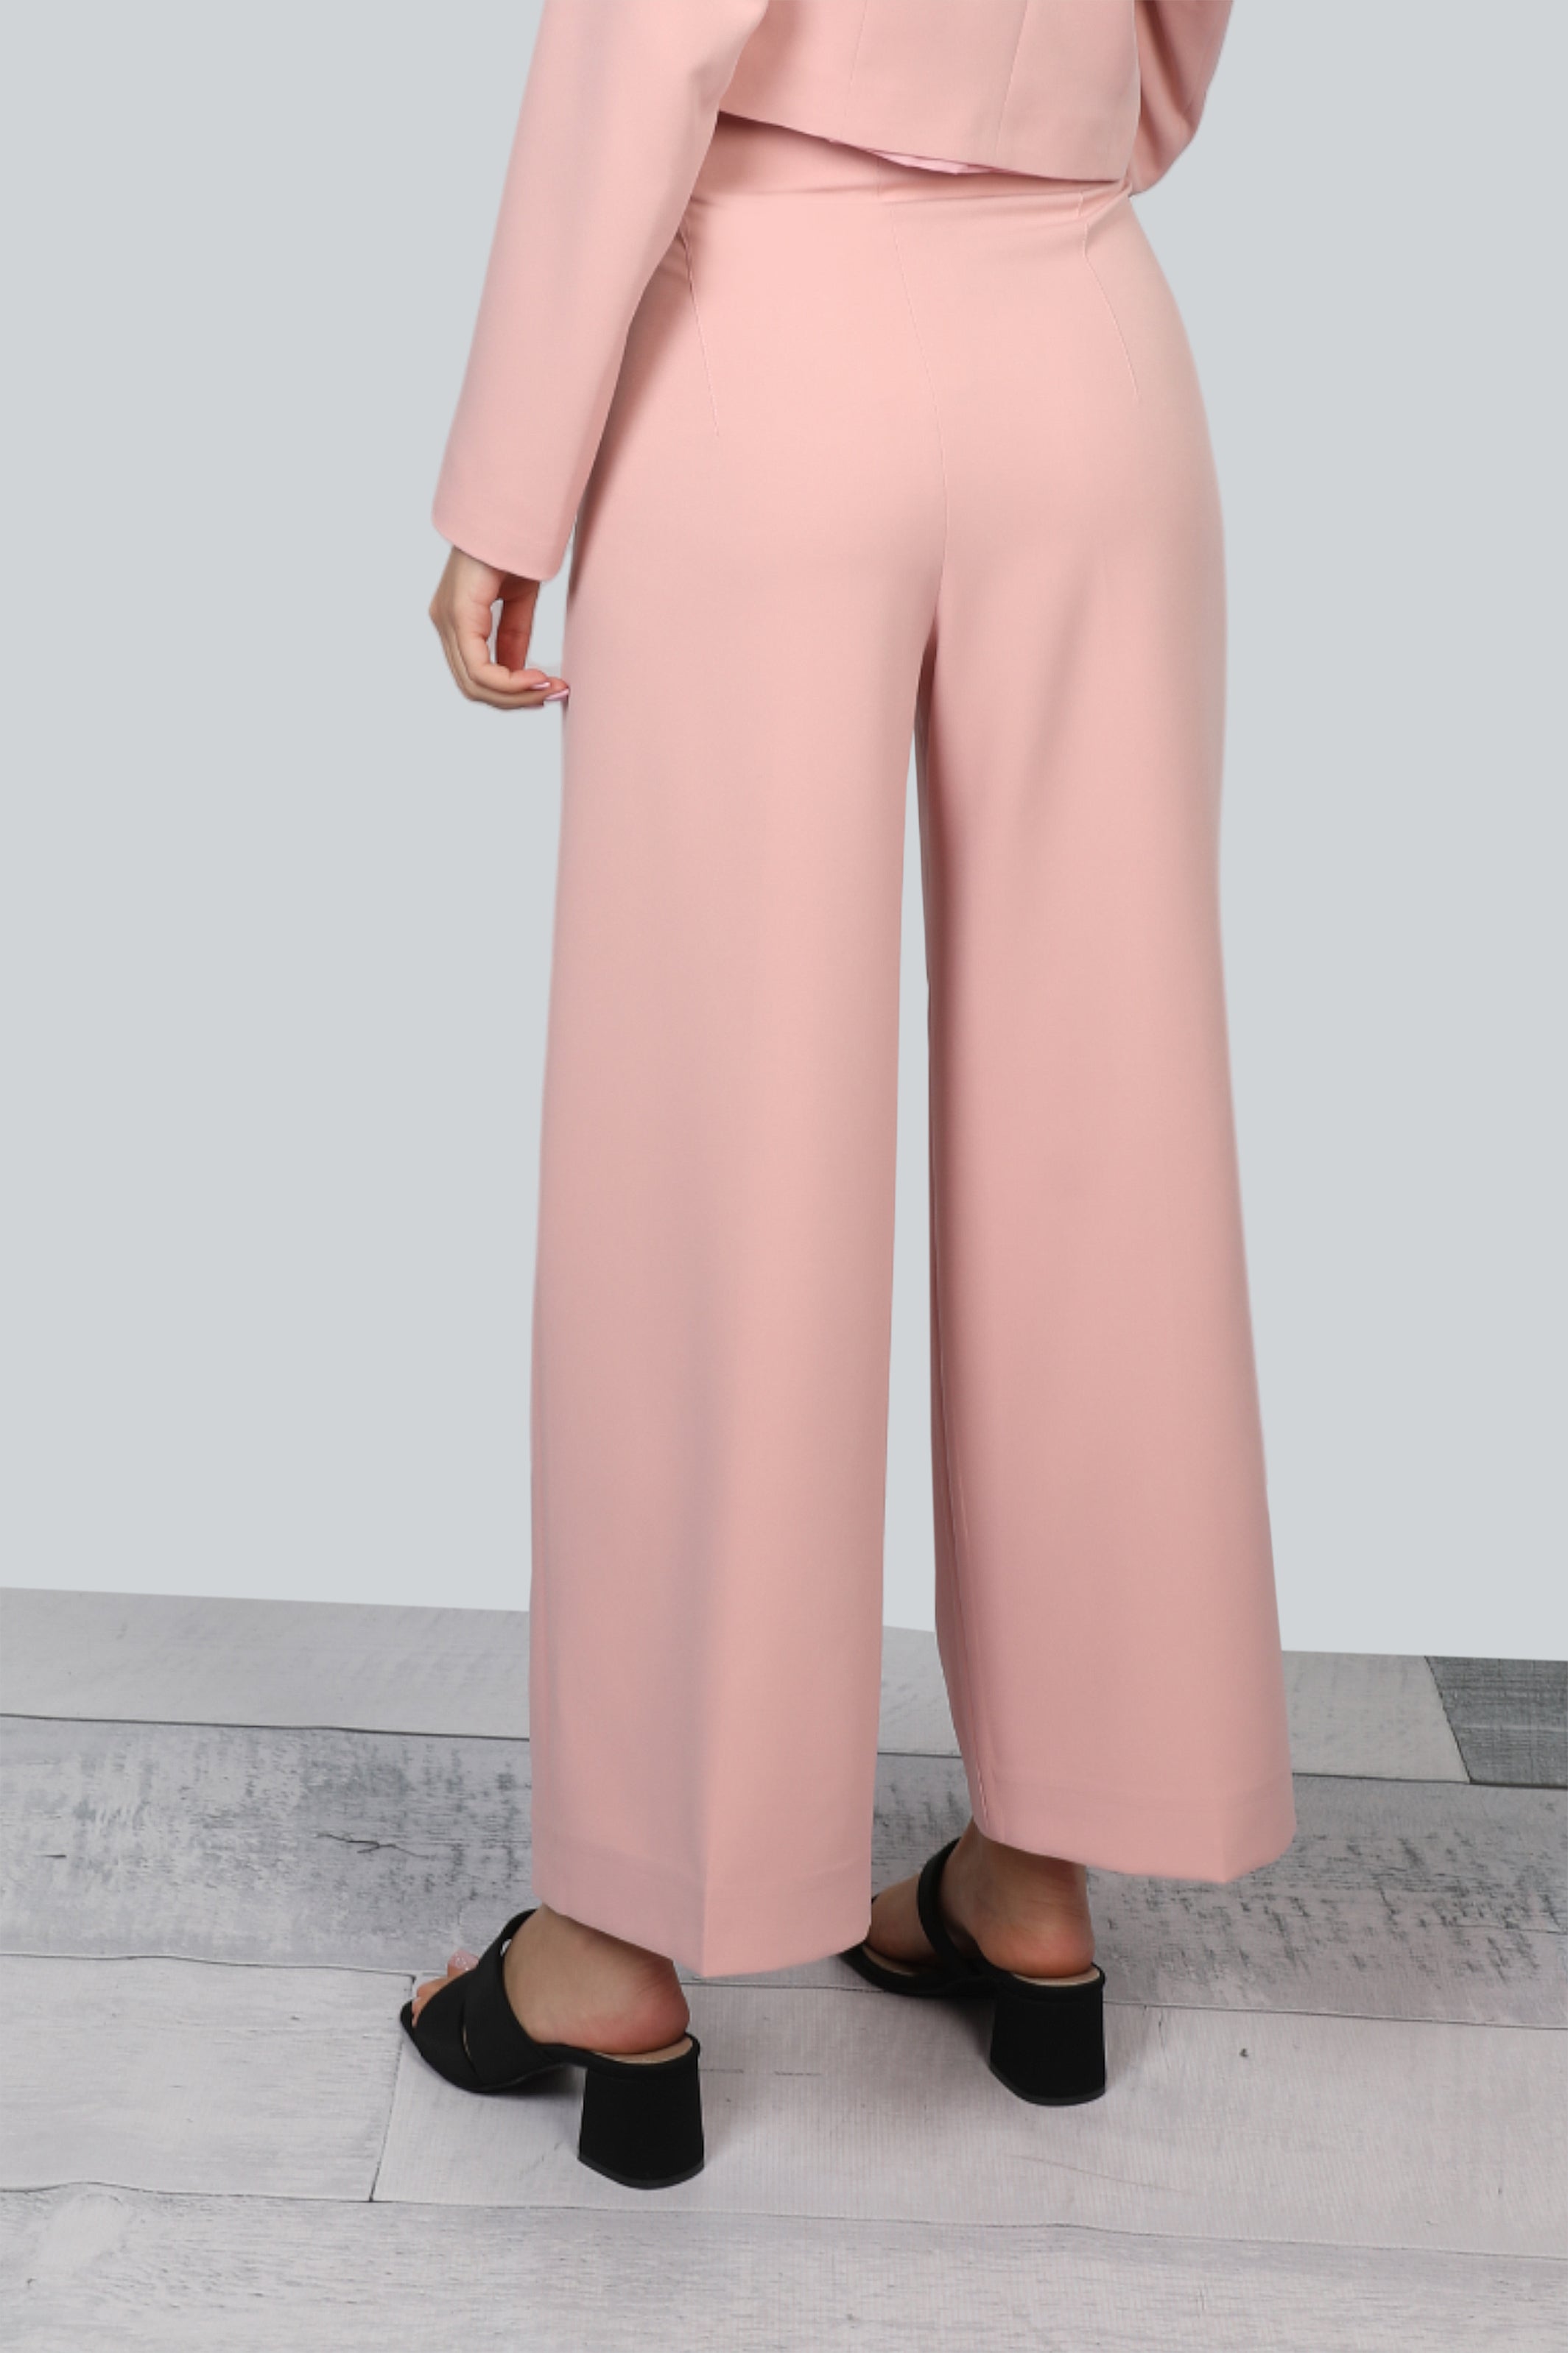 Classy Pink High Waist Pants